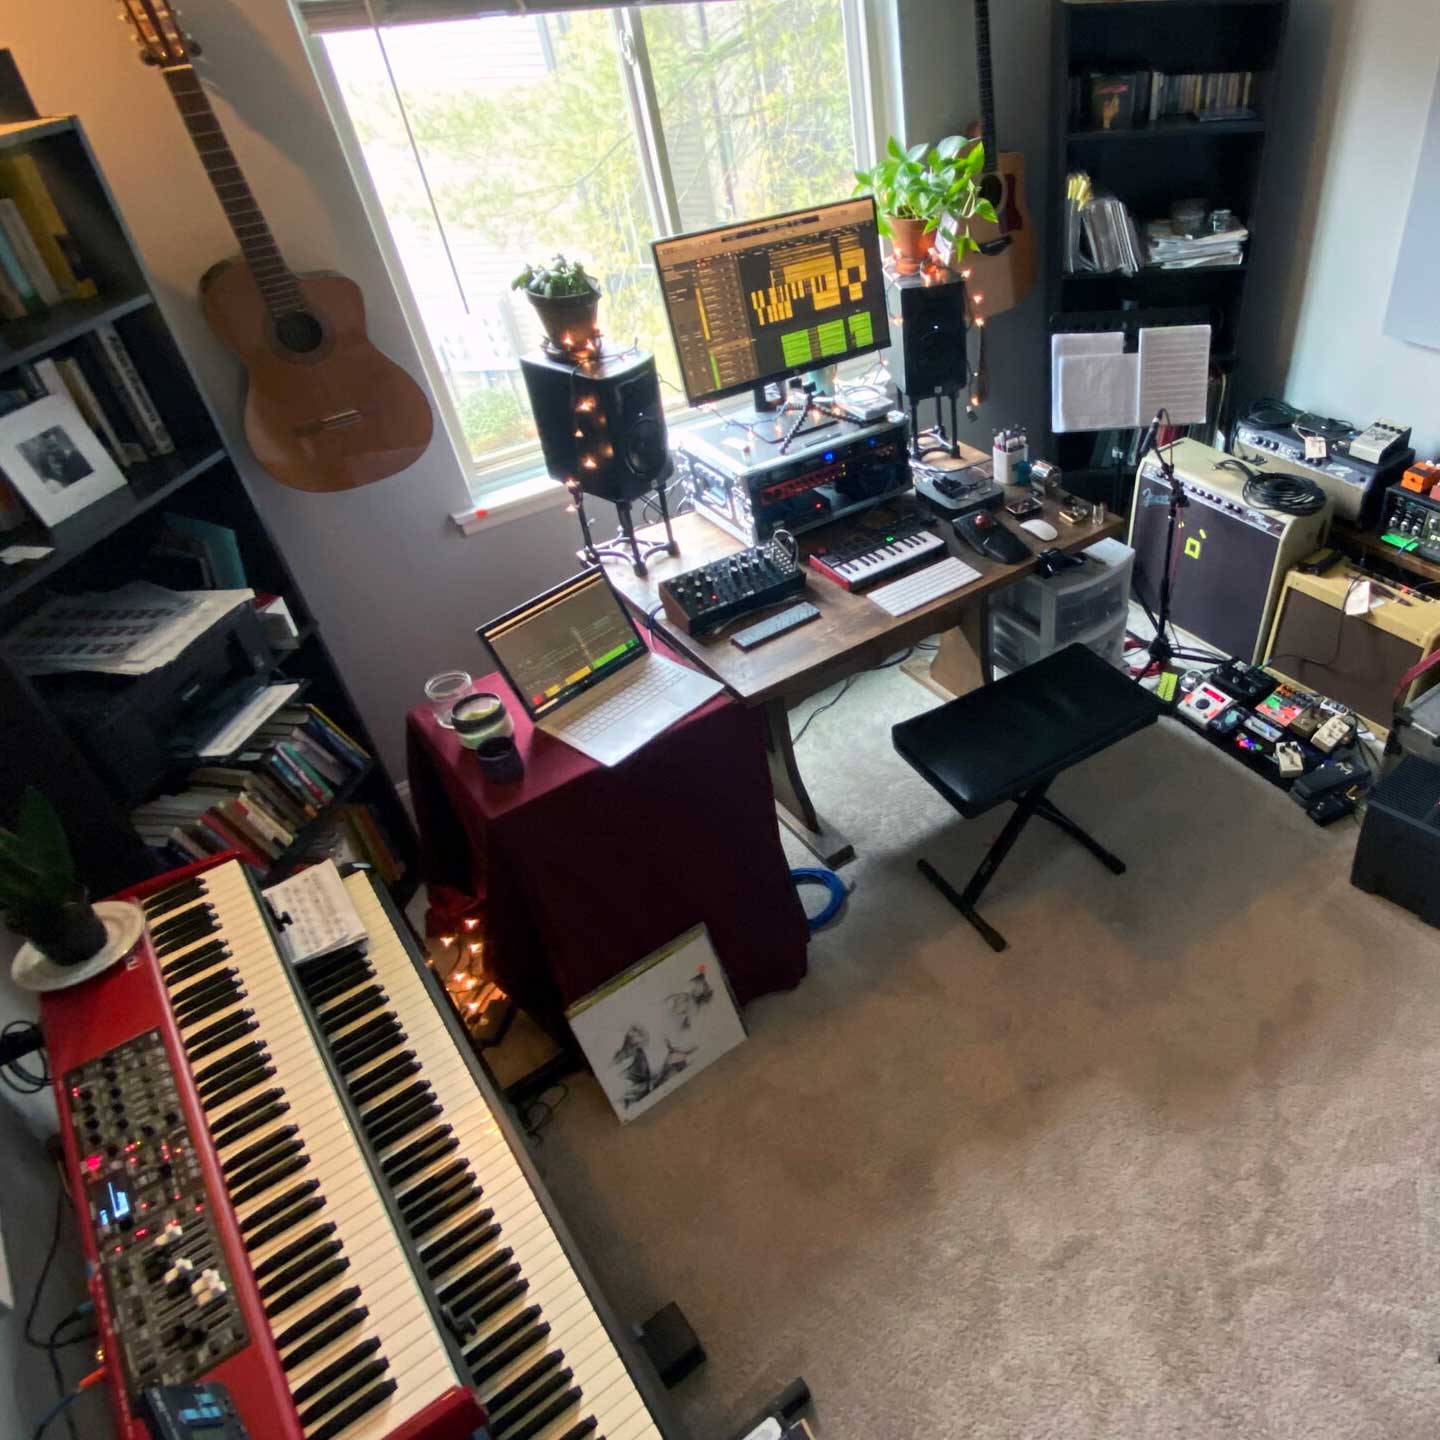 Studio aan huis met keyboard, versterkers en andere muziekapparatuur